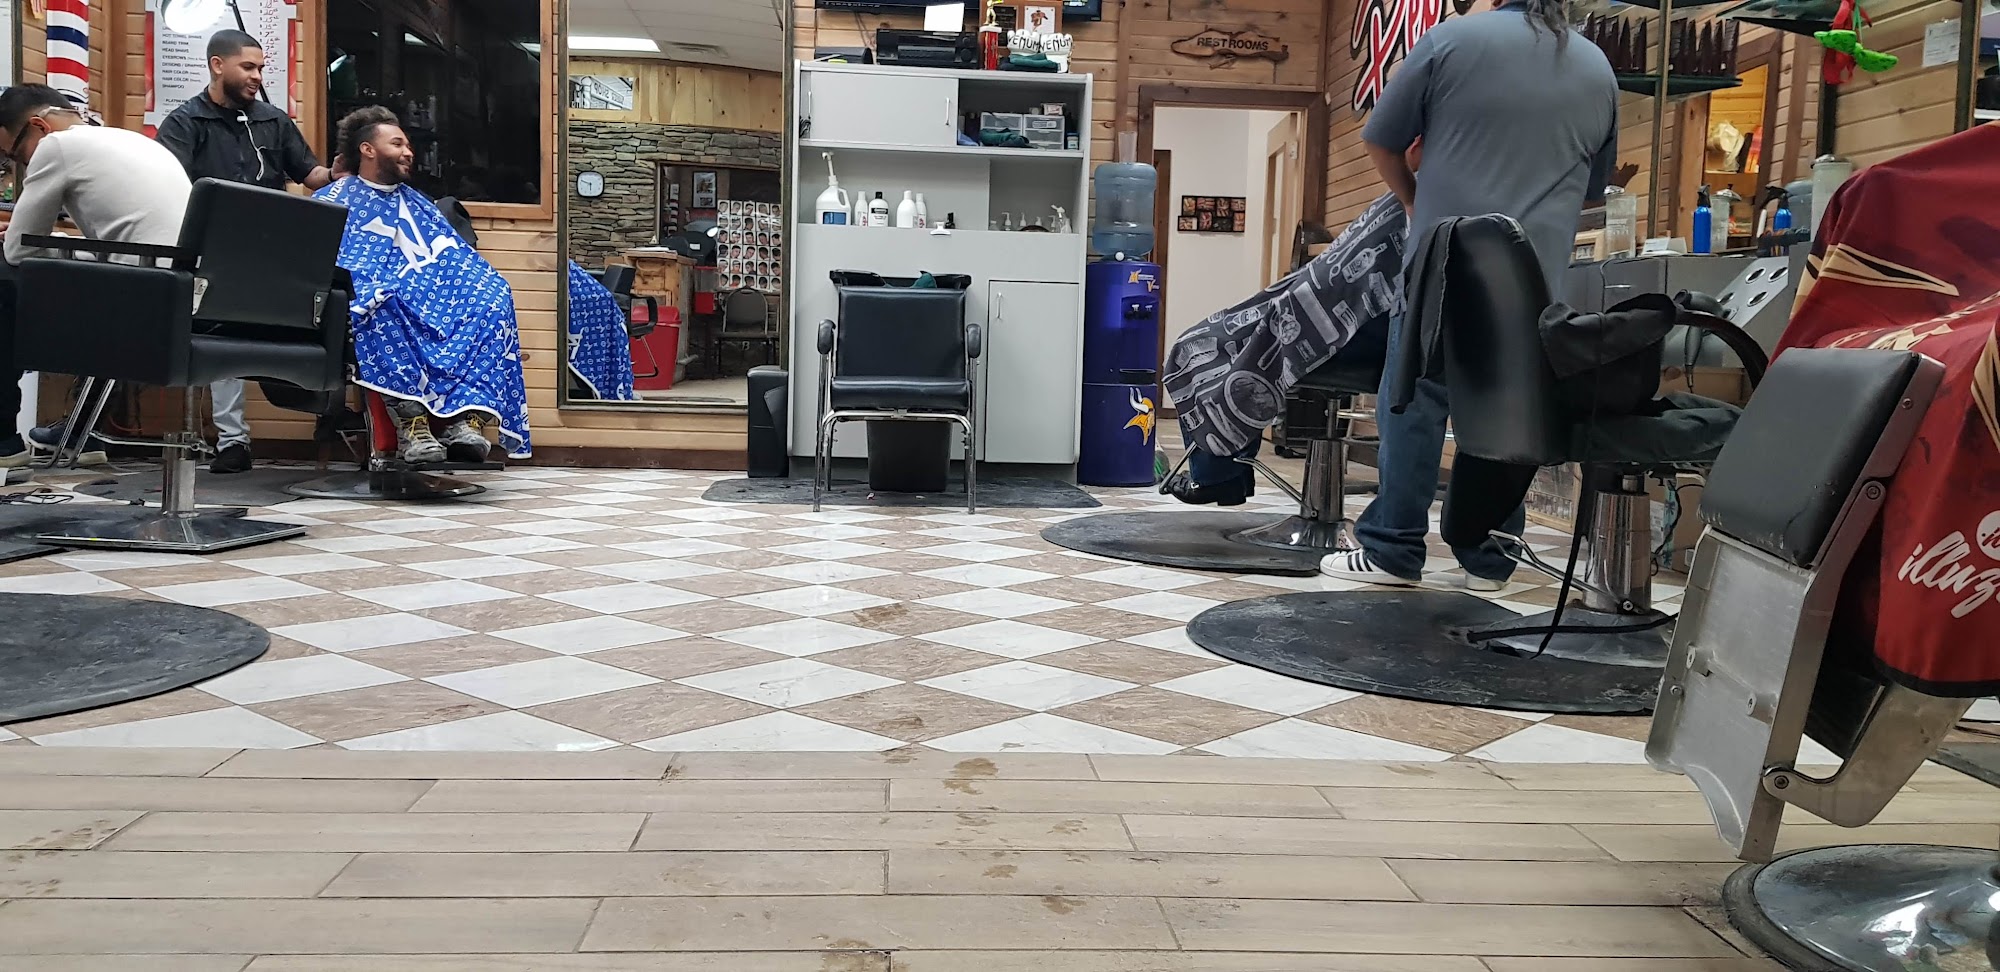 Pep's Barber Shop & Salon